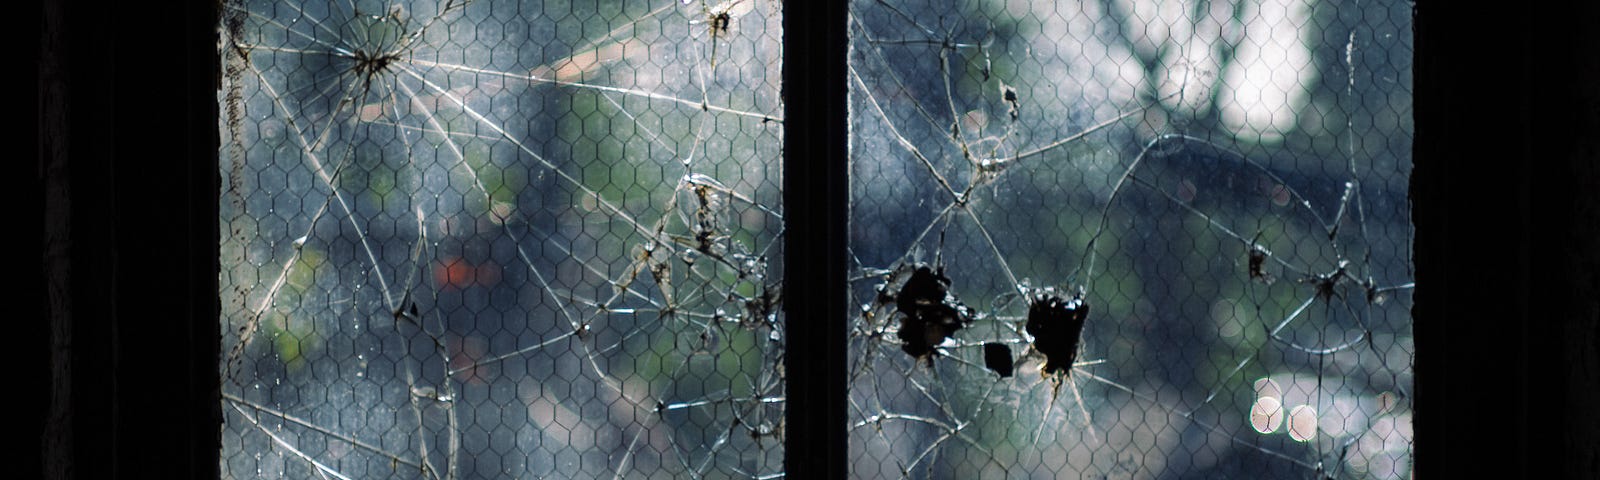 A broken window, illustrating our broken lives.